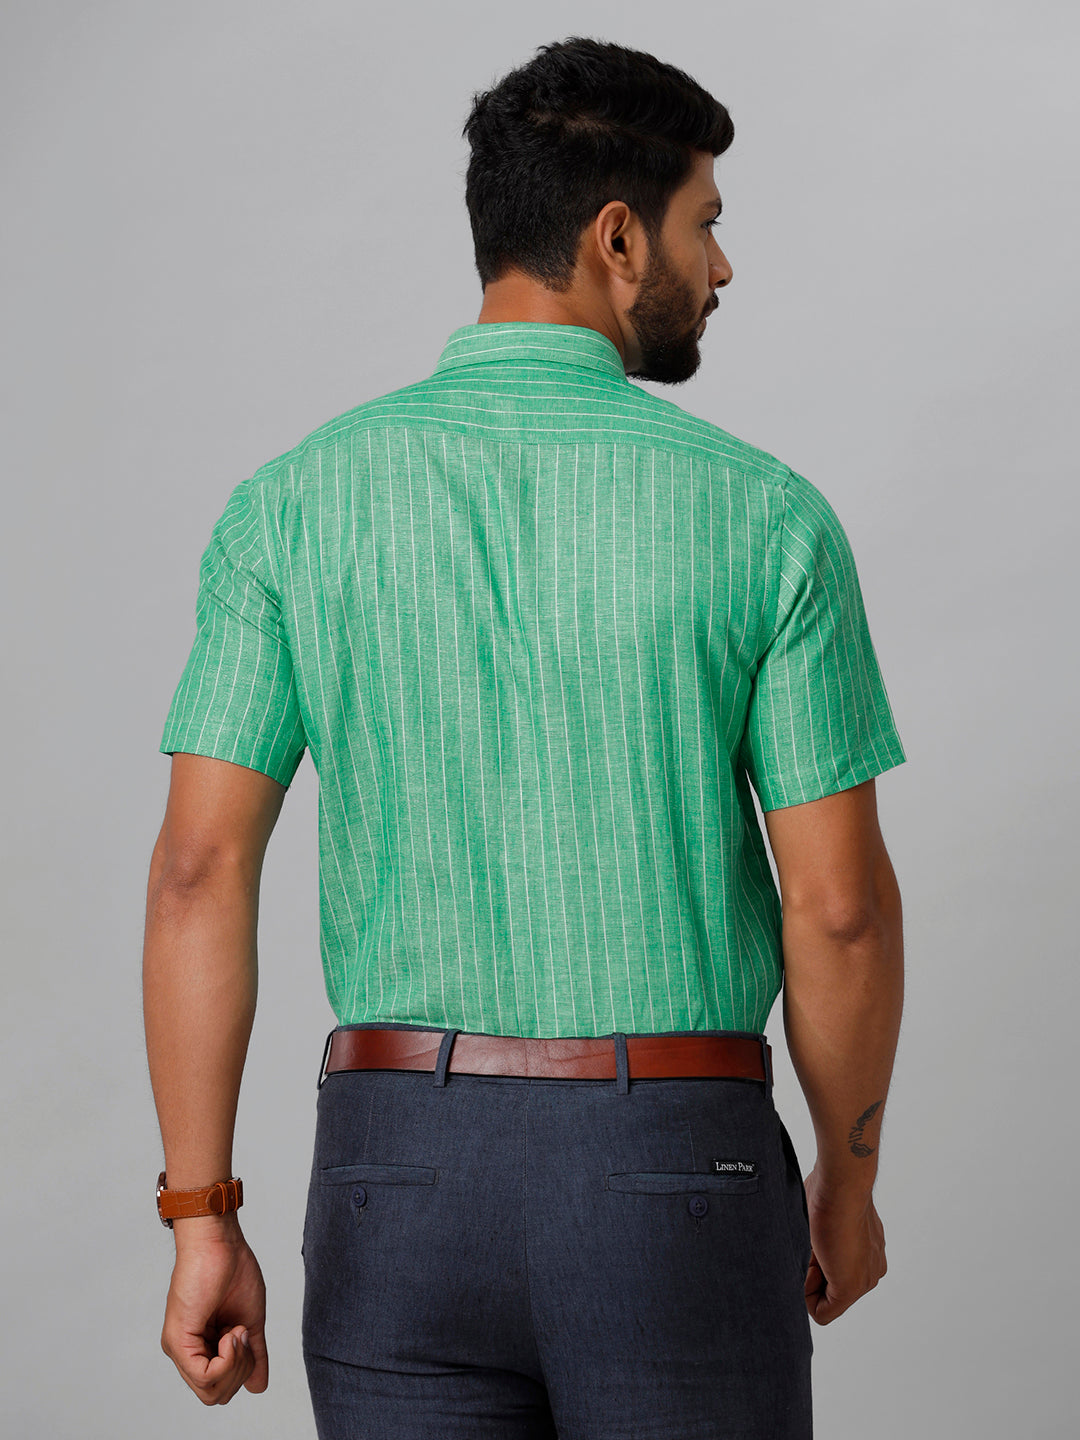 Mens Pure Linen Striped Half Sleeves Green Shirt LS12-Back view